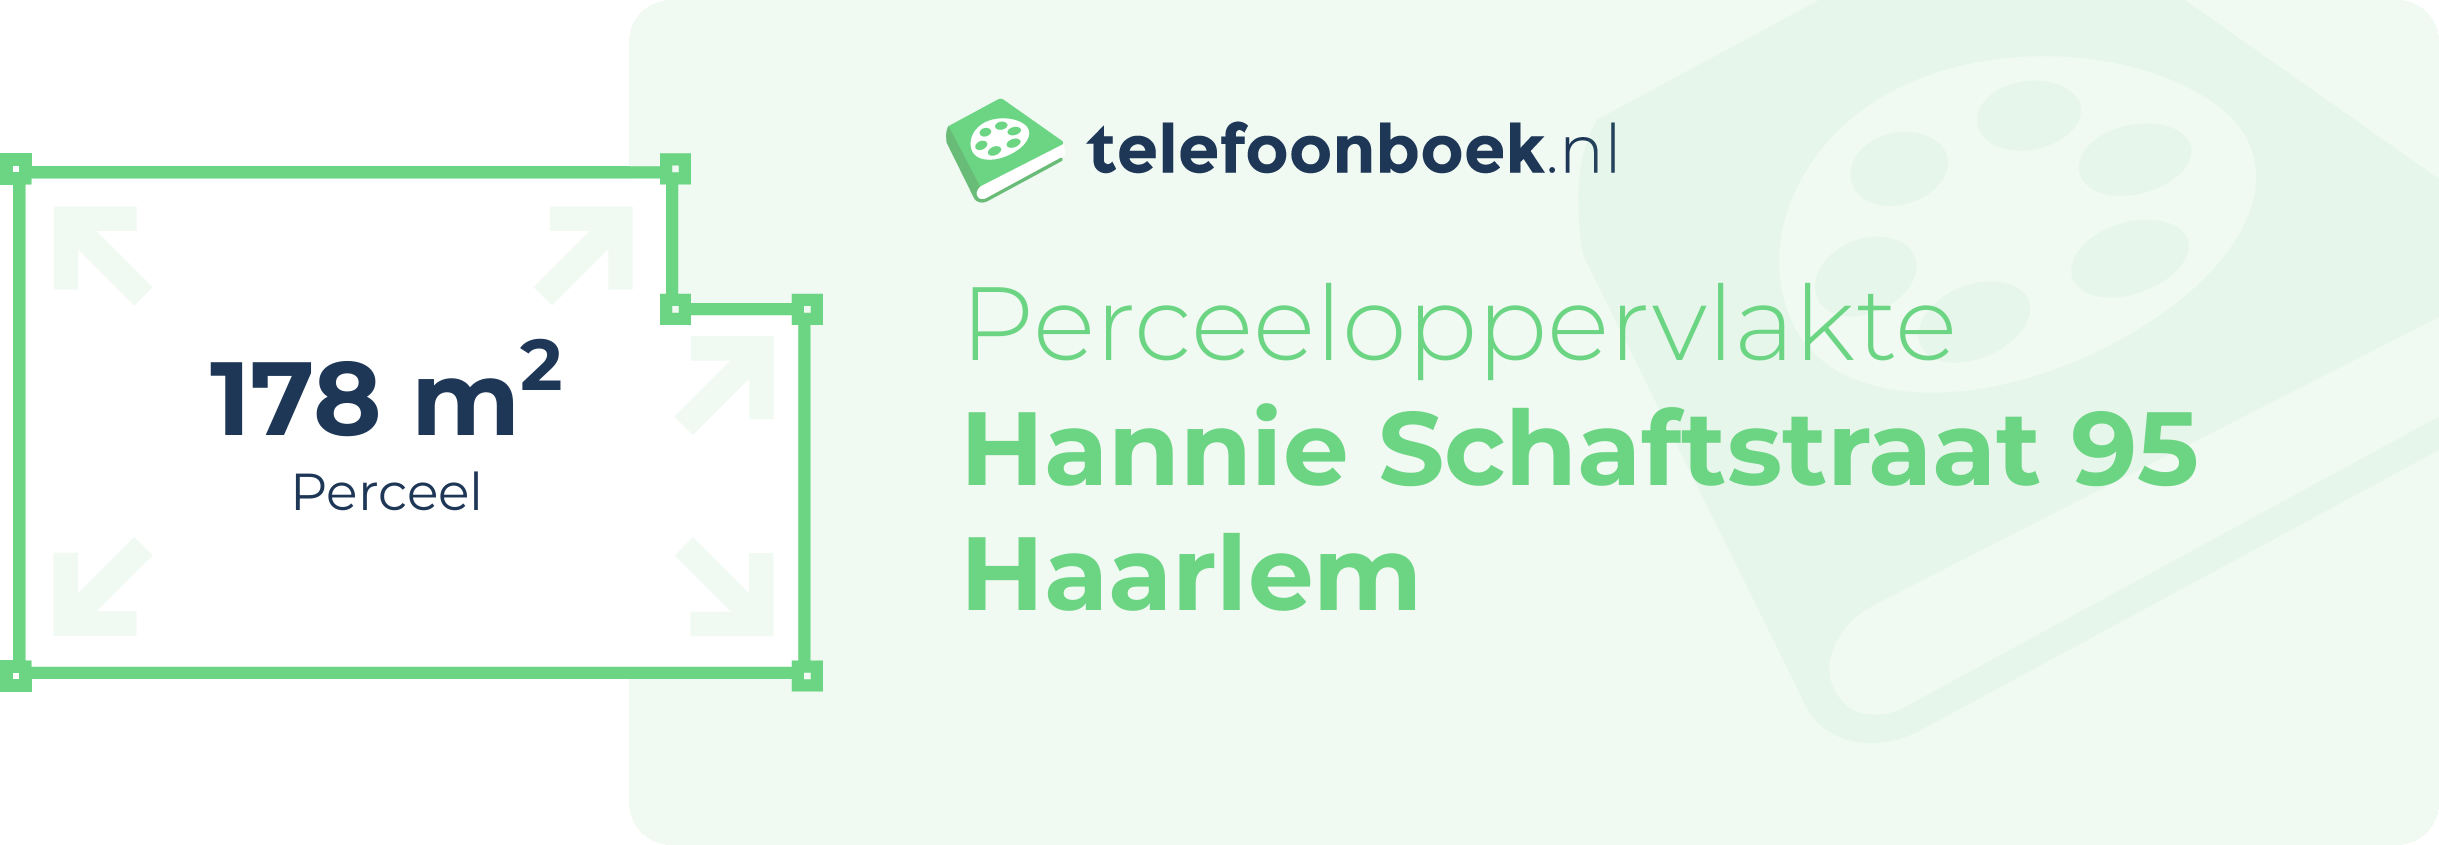 Perceeloppervlakte Hannie Schaftstraat 95 Haarlem